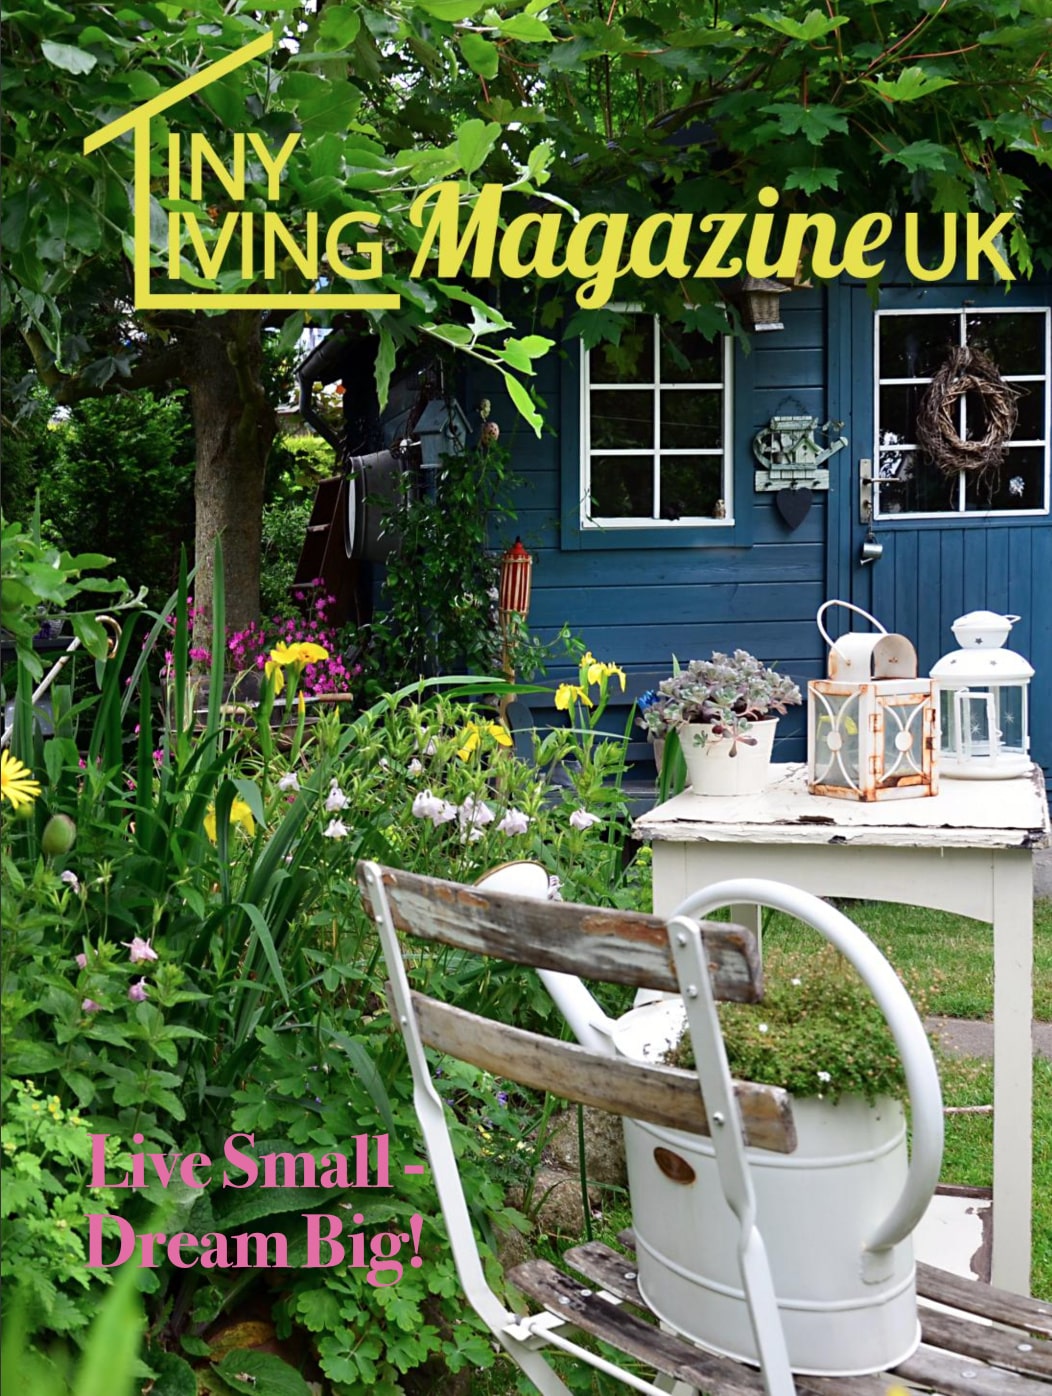 Tiny House UK example in magazine